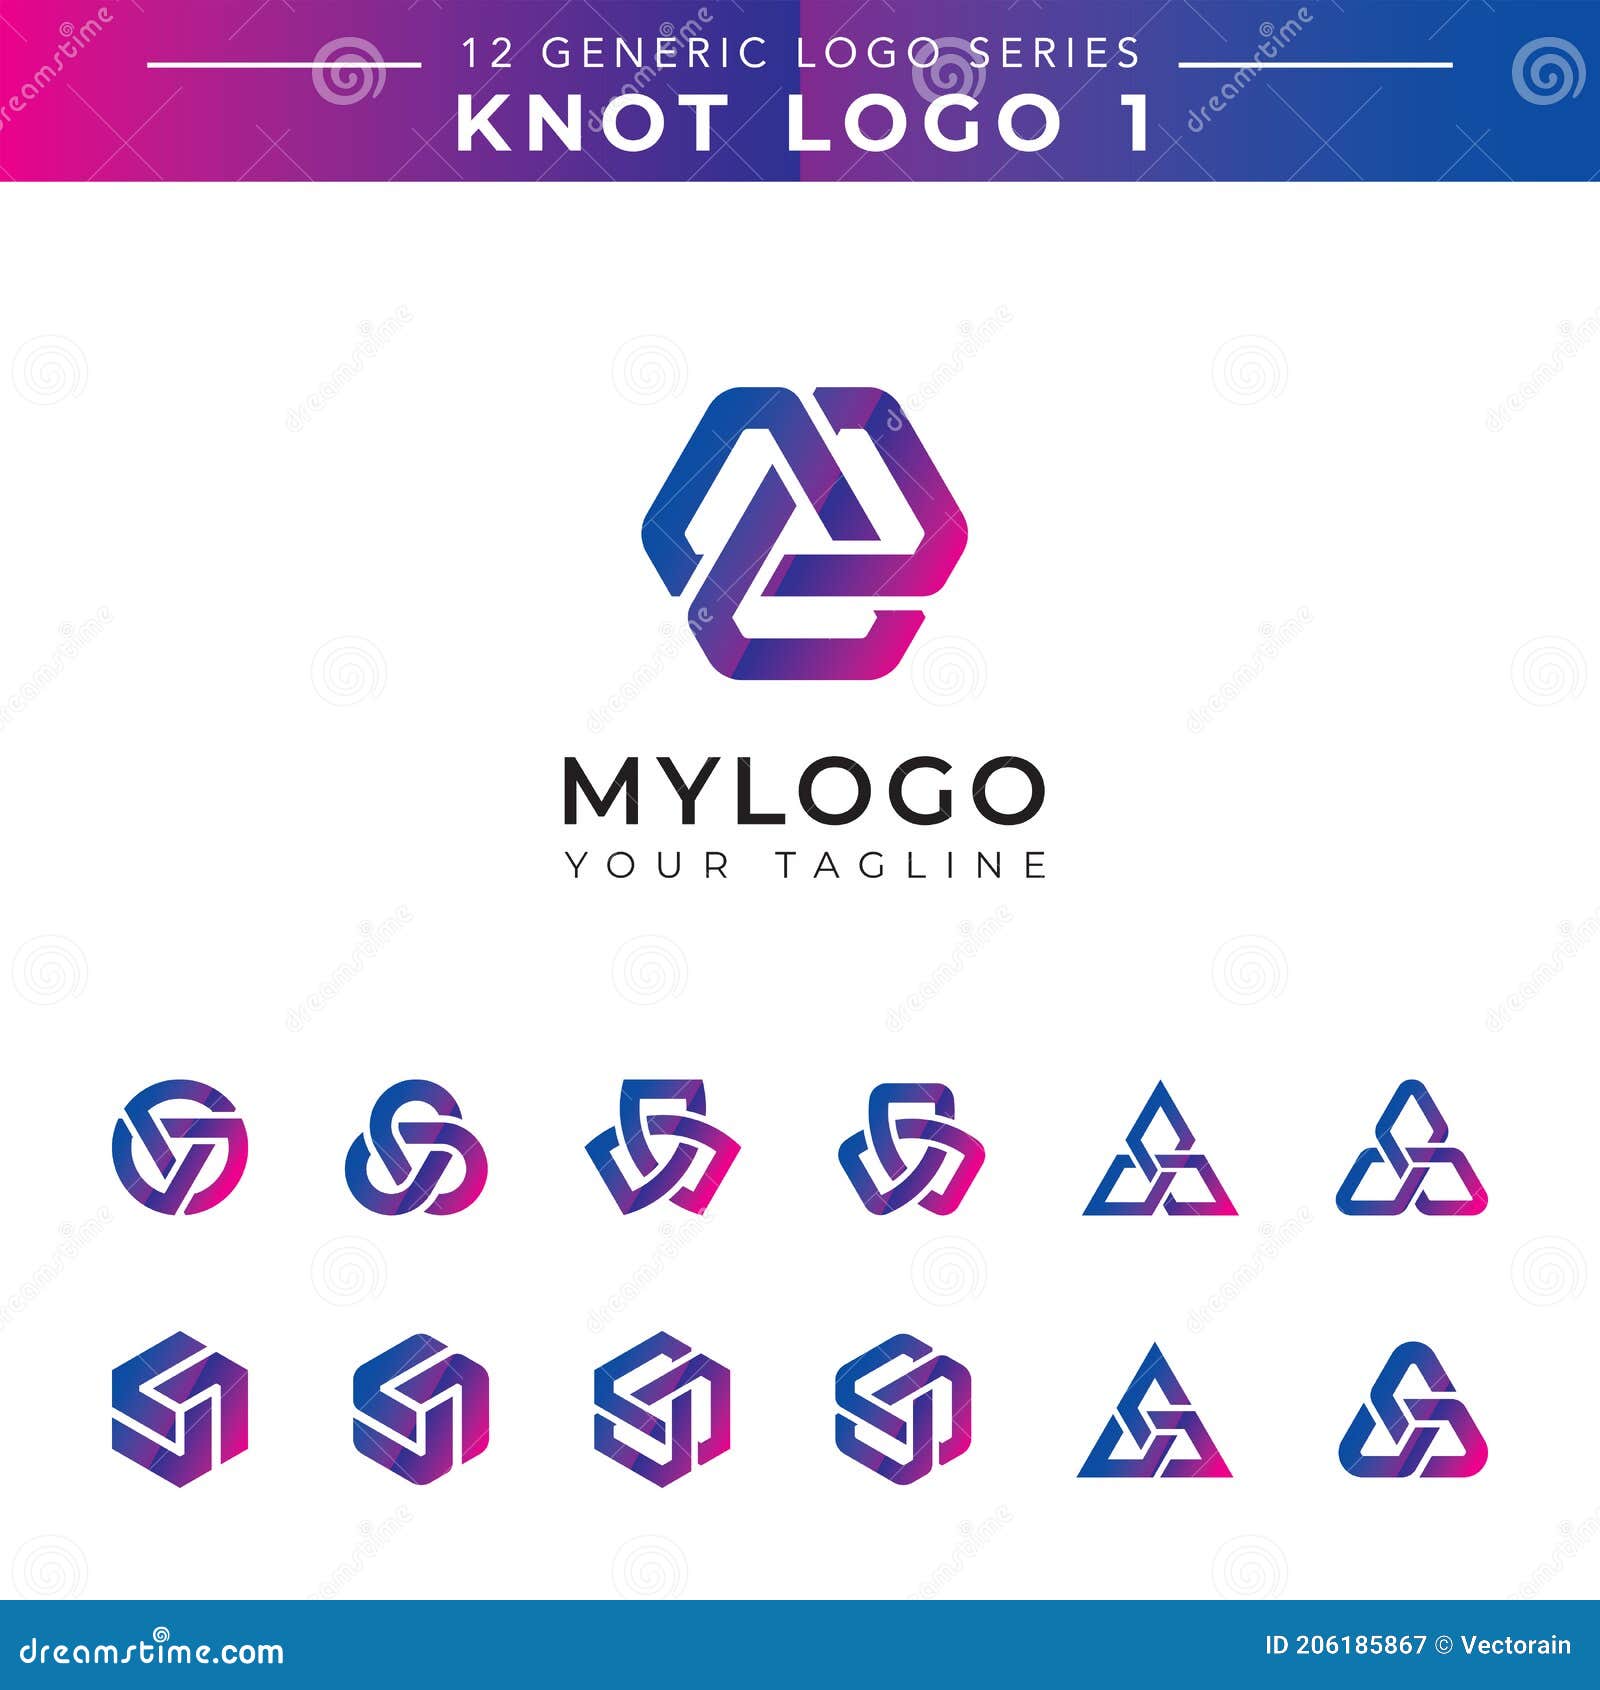 12 generic logo series: infinity knot logo template 1